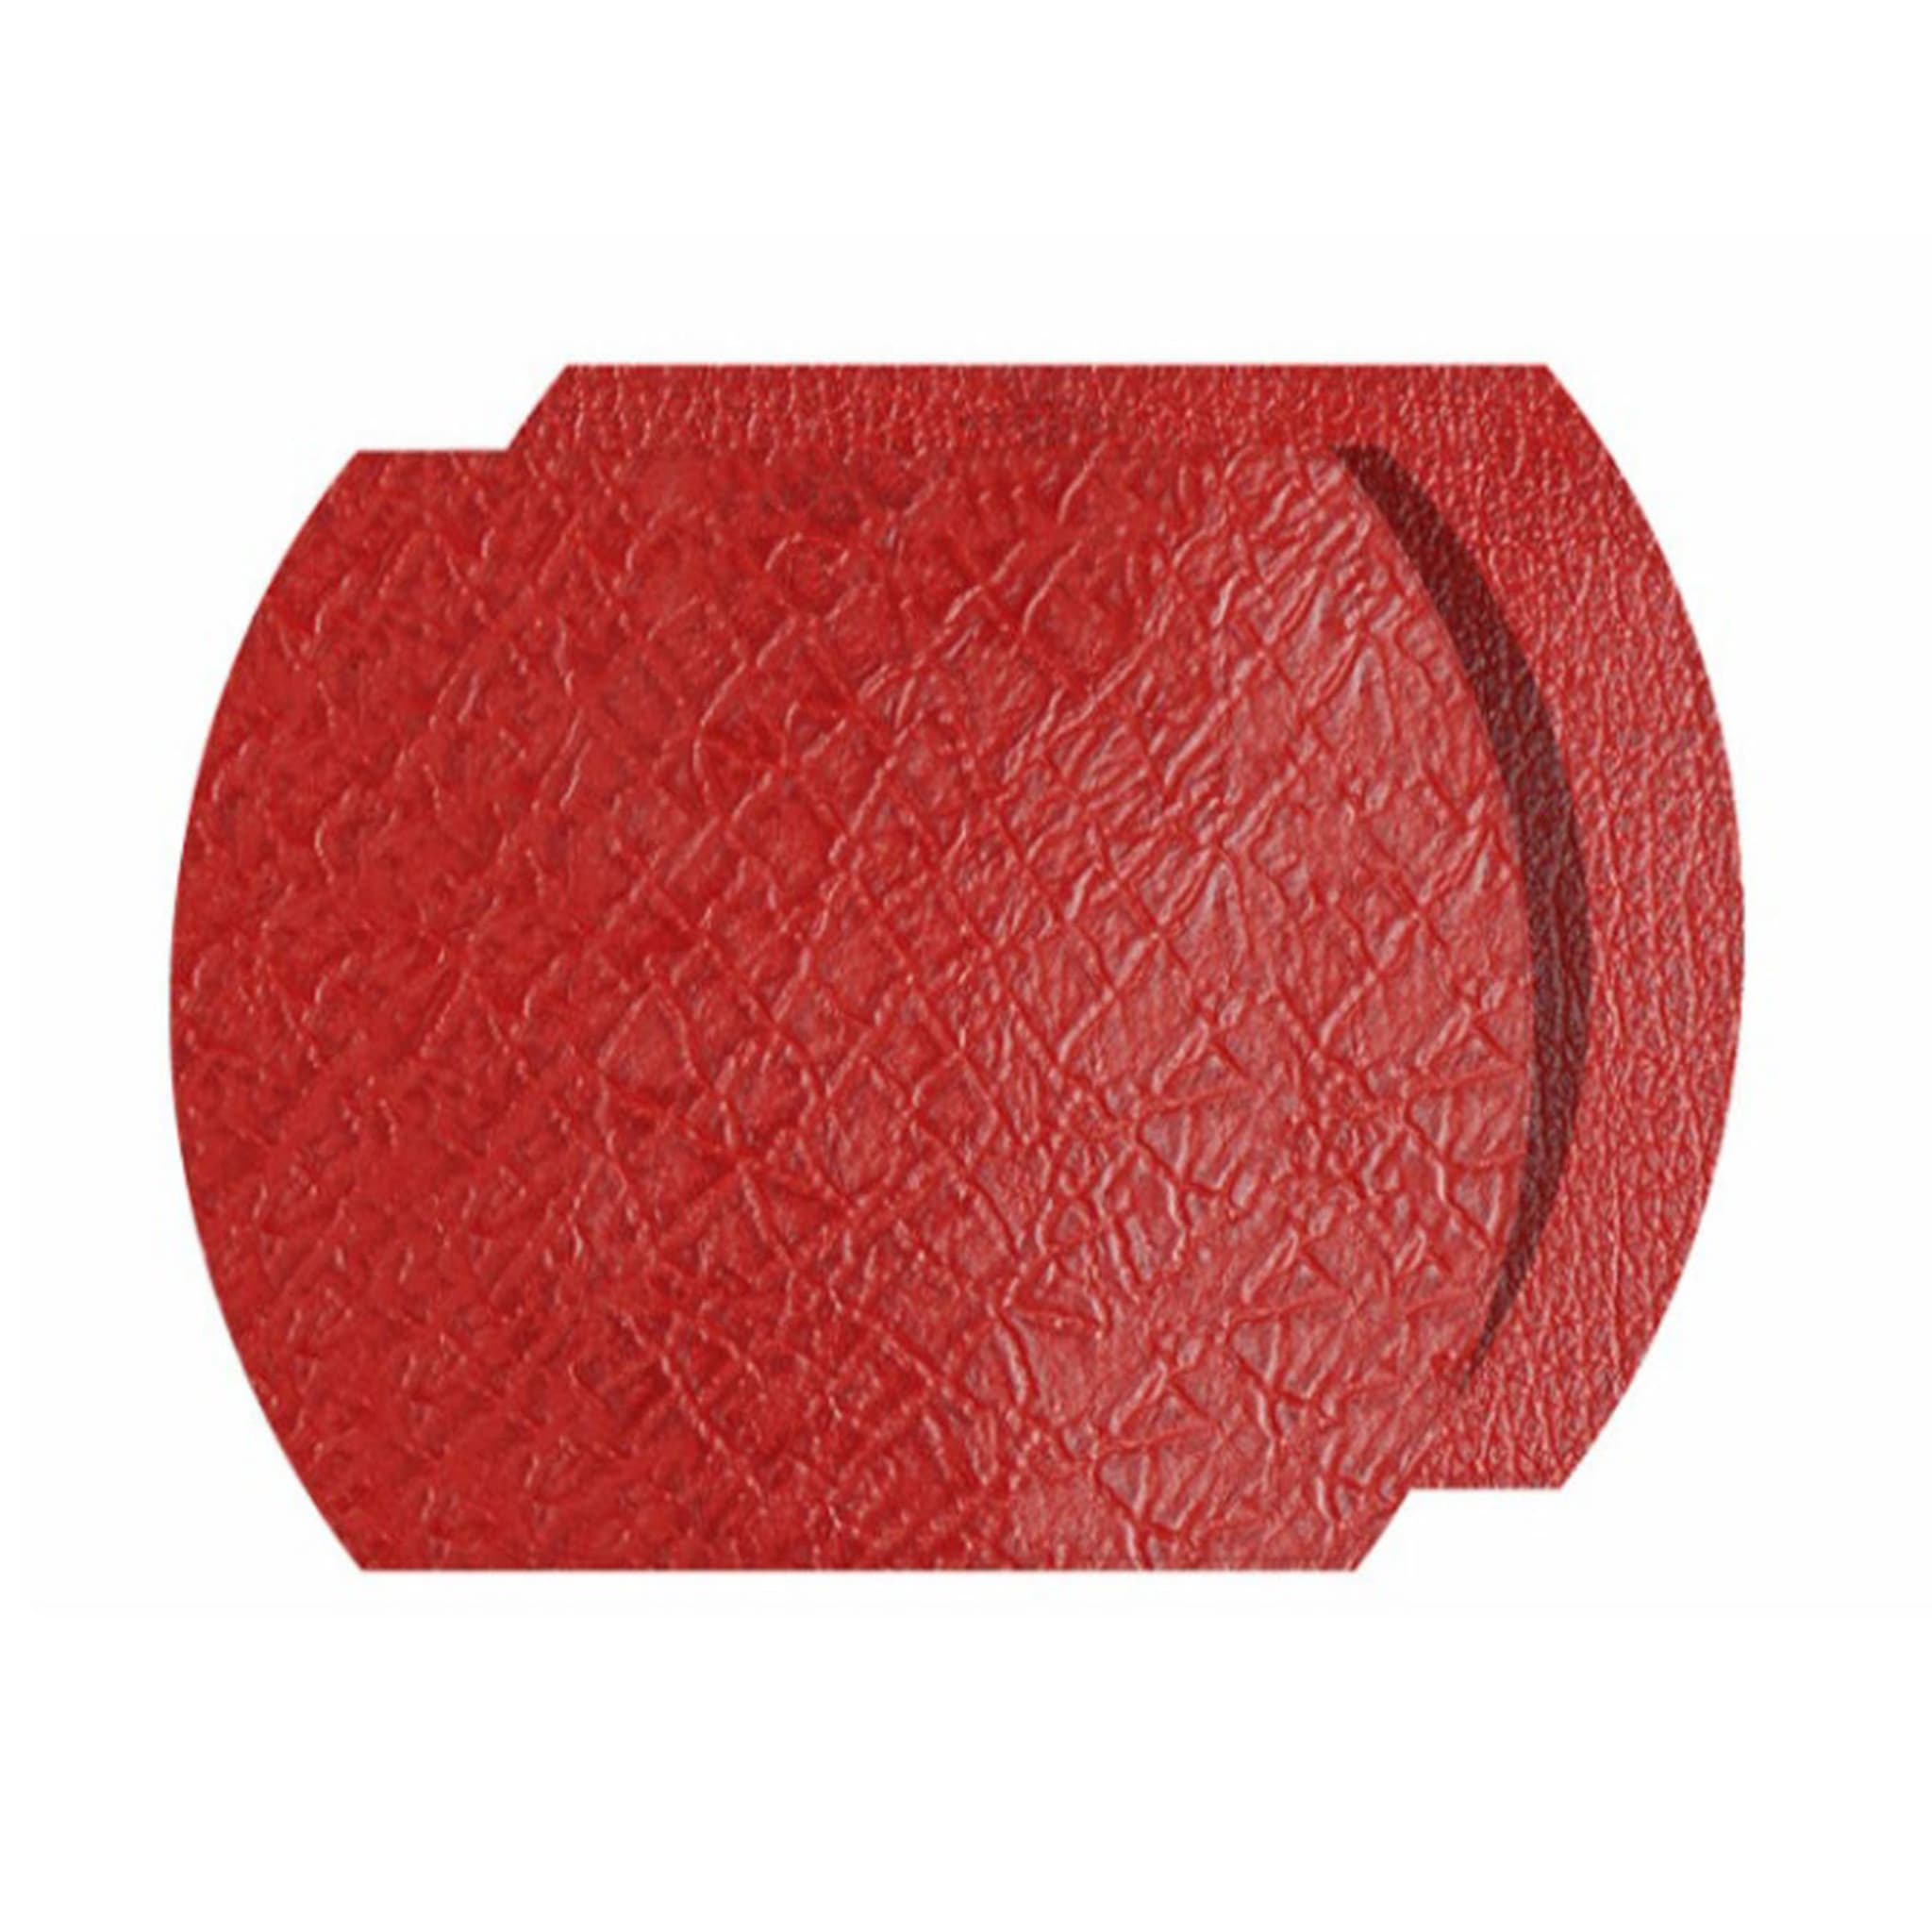 Tansania Medium 2er-Set Platzsets aus rotem Leder - Hauptansicht